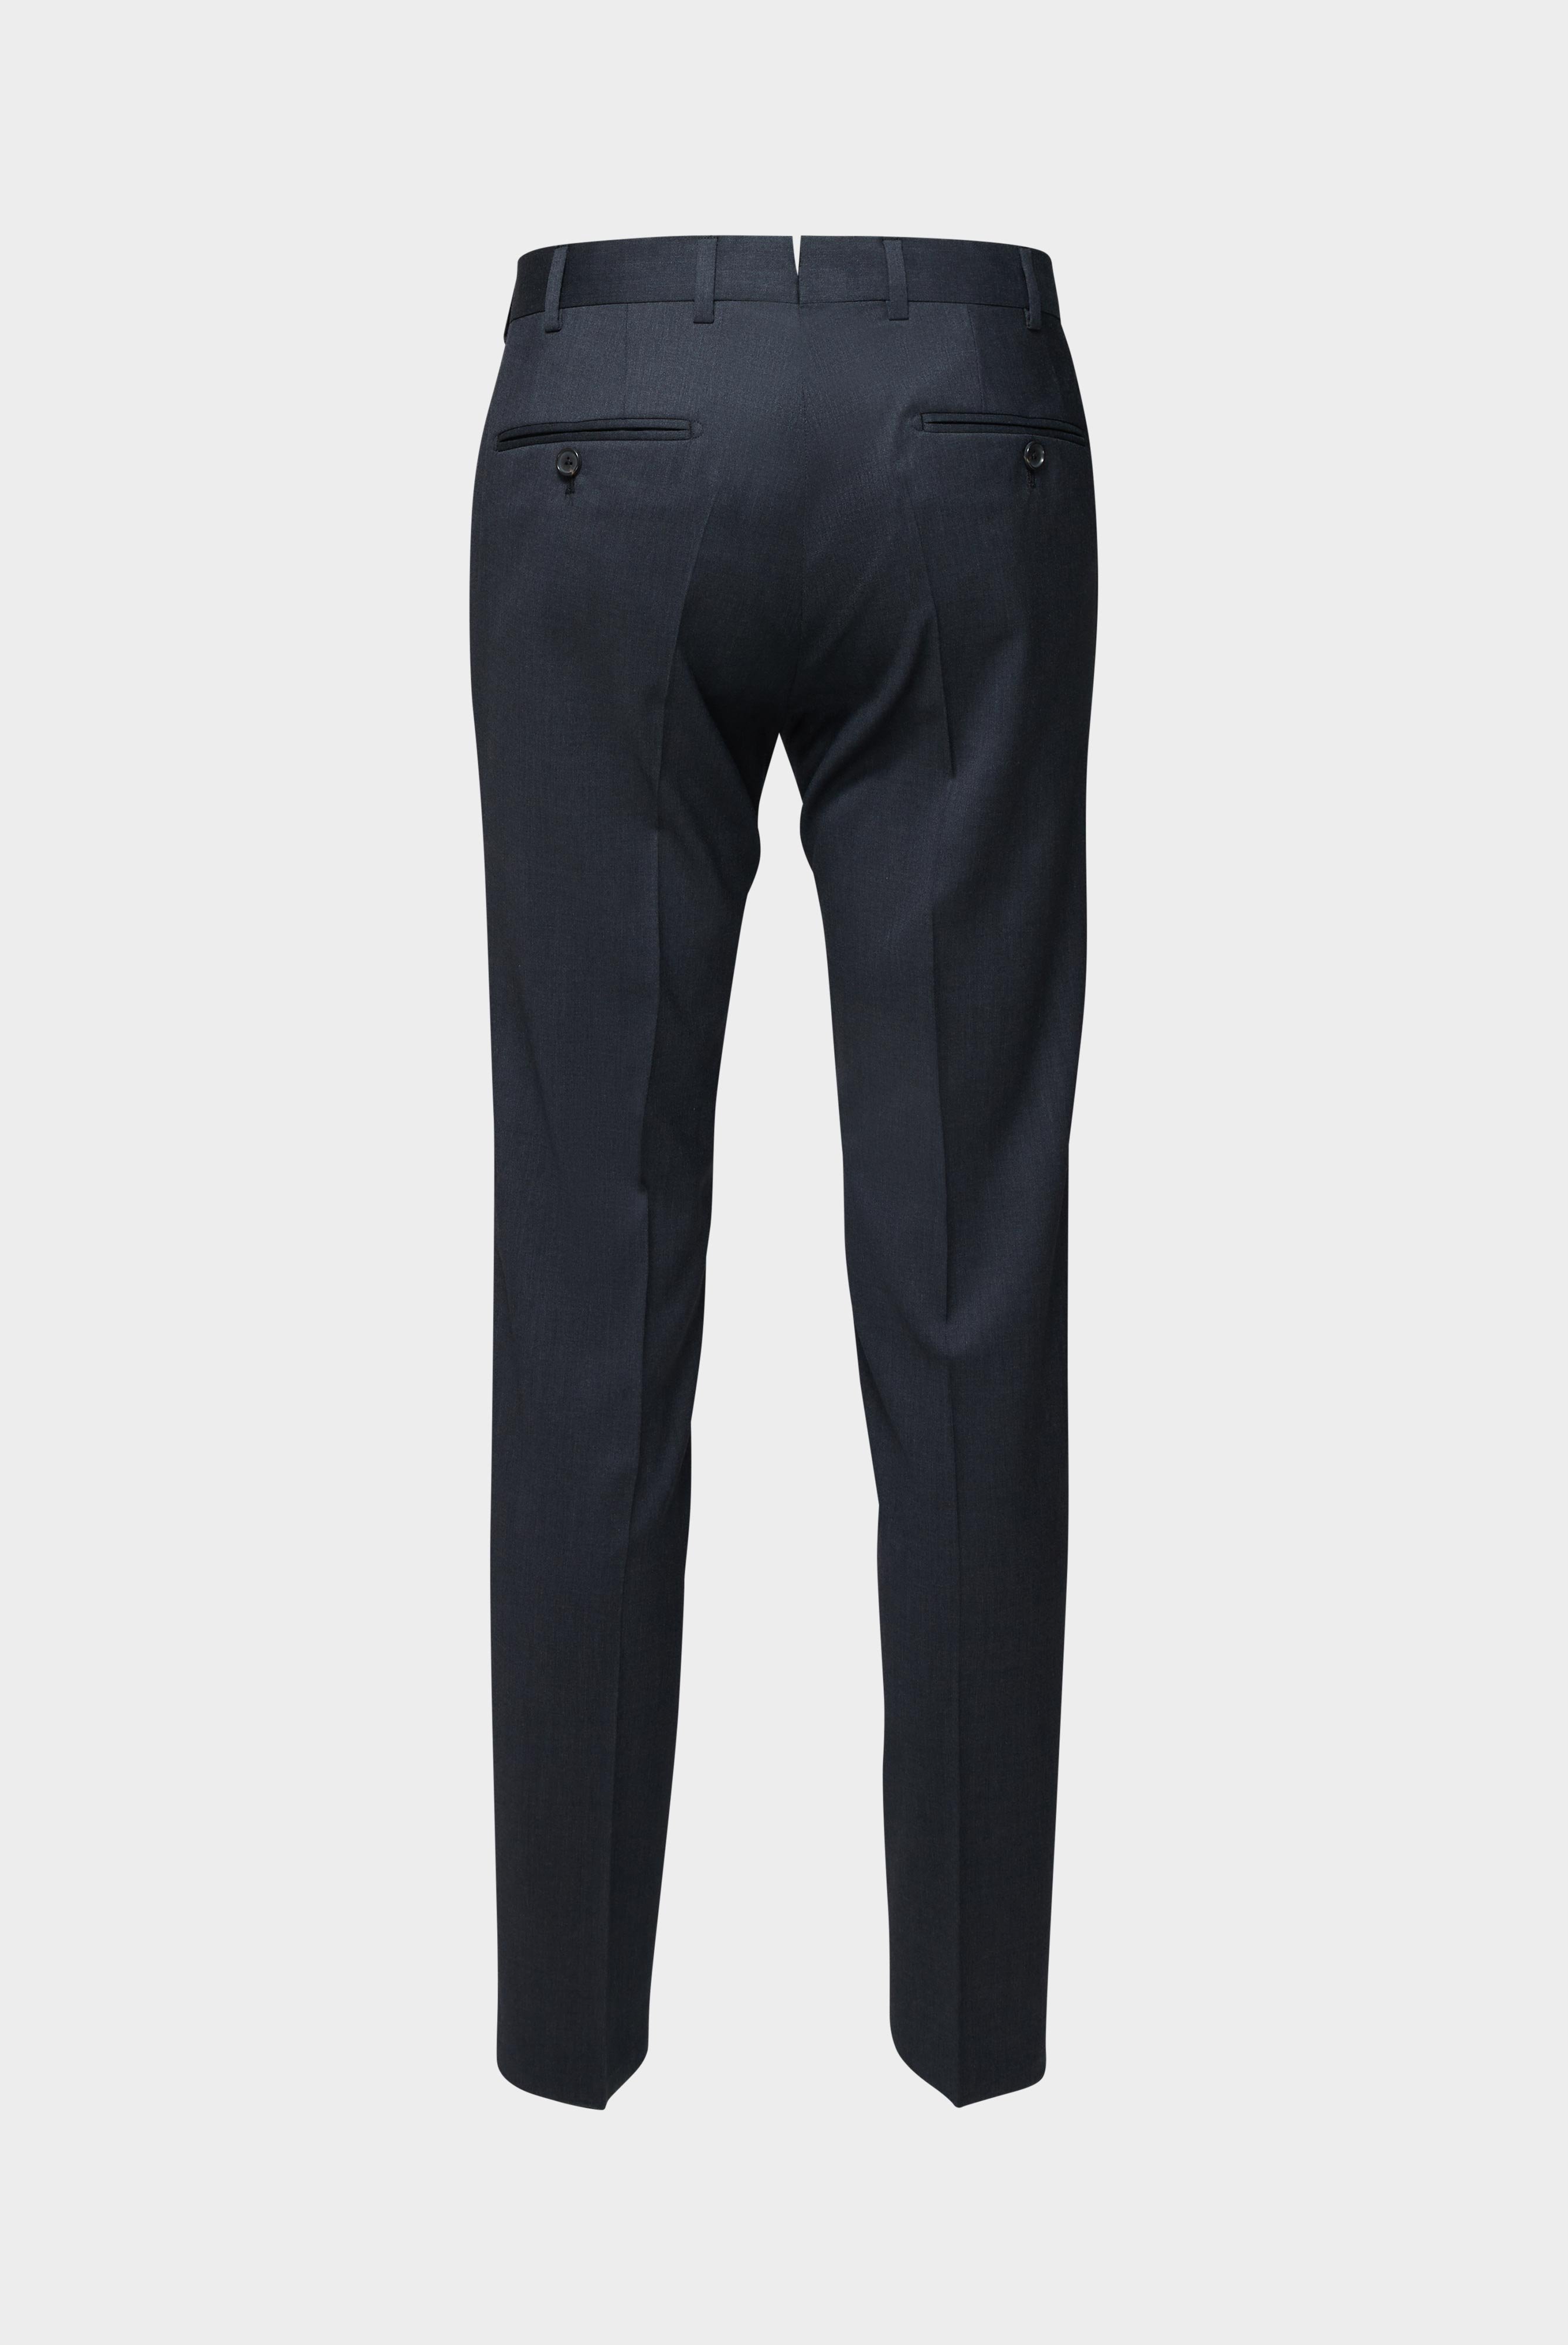 Jeans & Hosen+Hose aus Wolle Slim Fit+20.7880.16.H01010.090.44